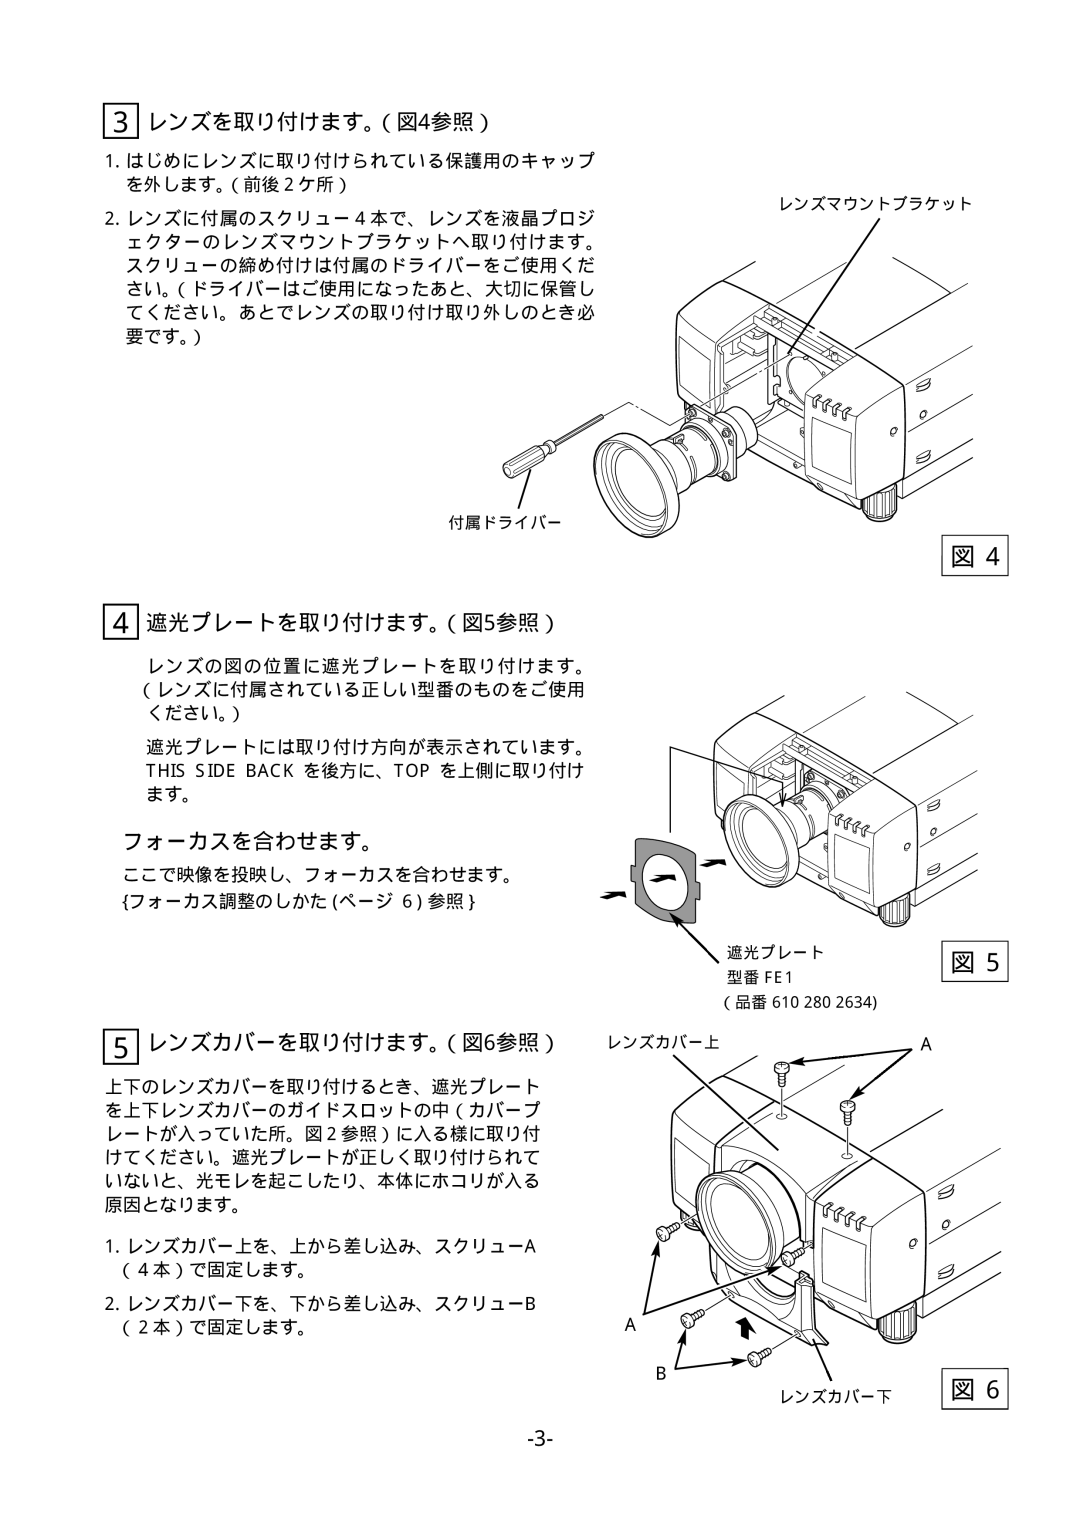 Fisher LNS-W03 manual レンズを取り付けます。（図4参照）, 遮光プレートを取り付けます。（図5参照）, フォーカスを合わせます。, 5 レンズカバーを取り付けます。（図6参照） 